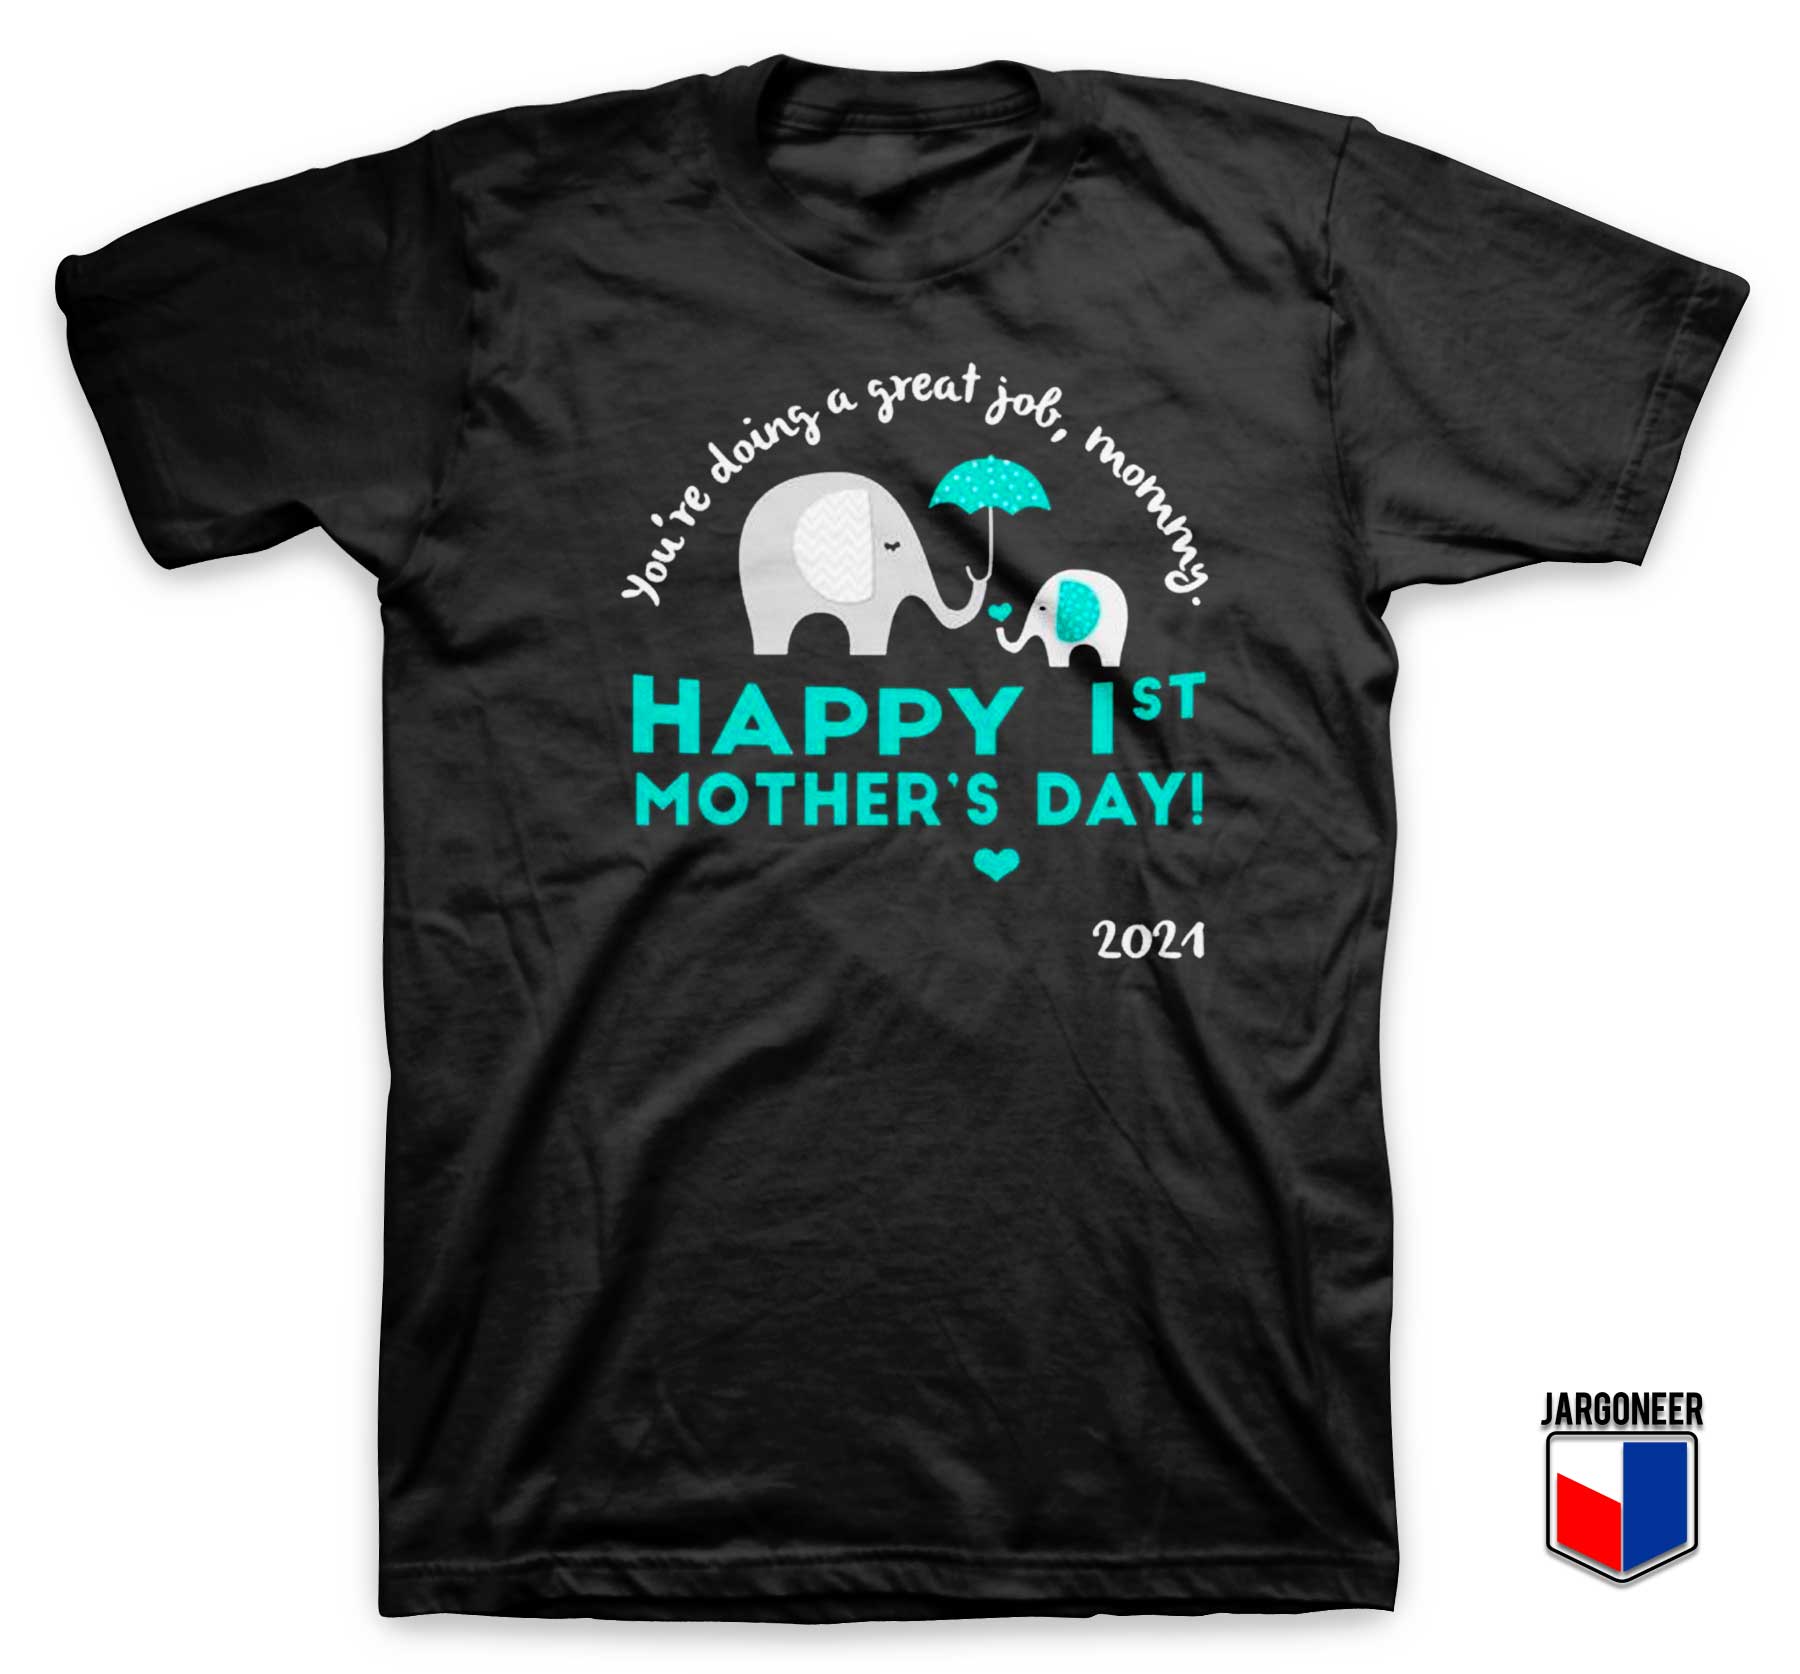 Happy Mother Day 2021 T Shirt - Shop Unique Graphic Cool Shirt Designs